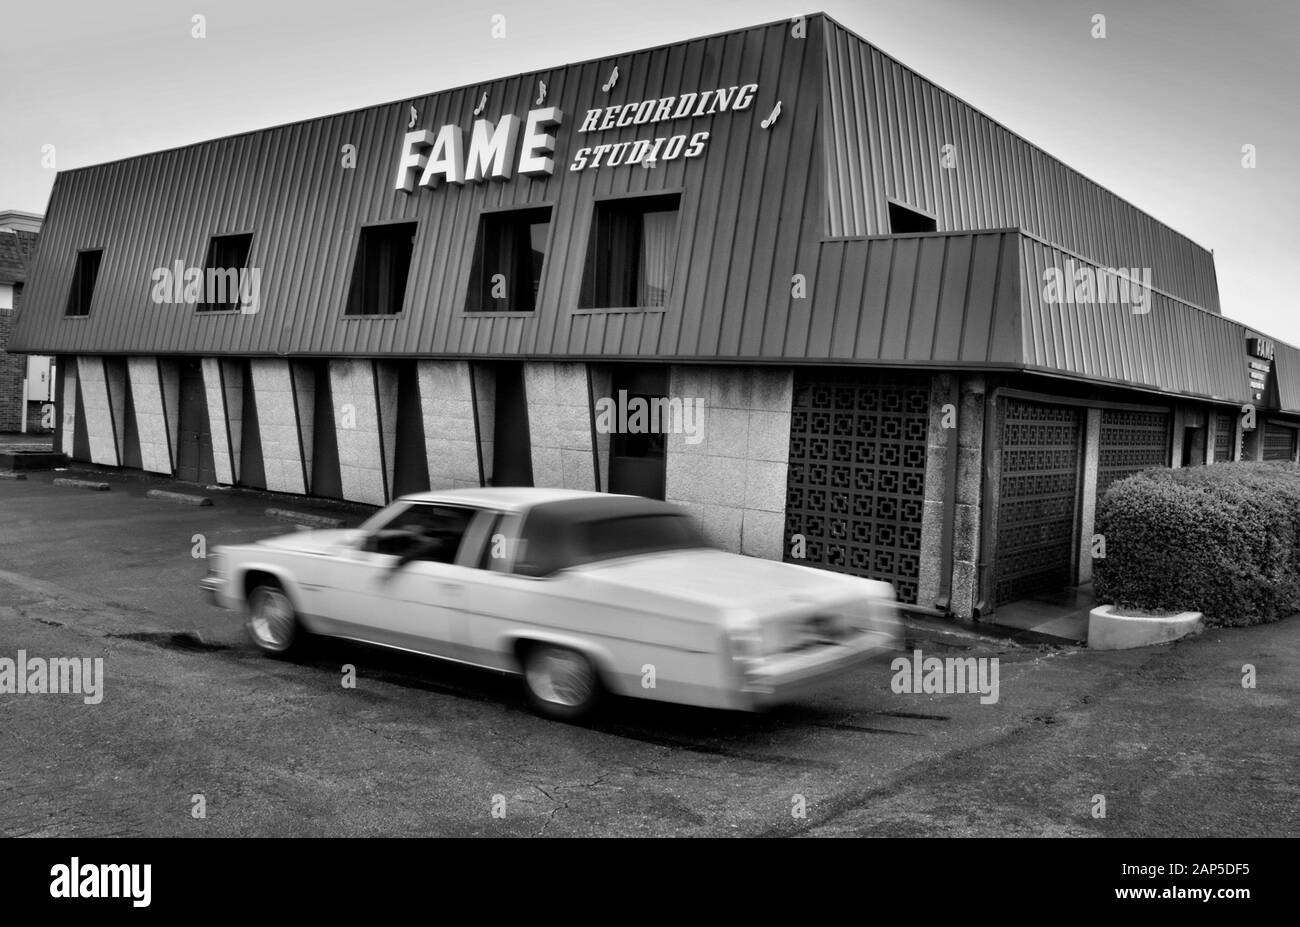 Fame studios Musche Shoals Alabama USA Banque D'Images